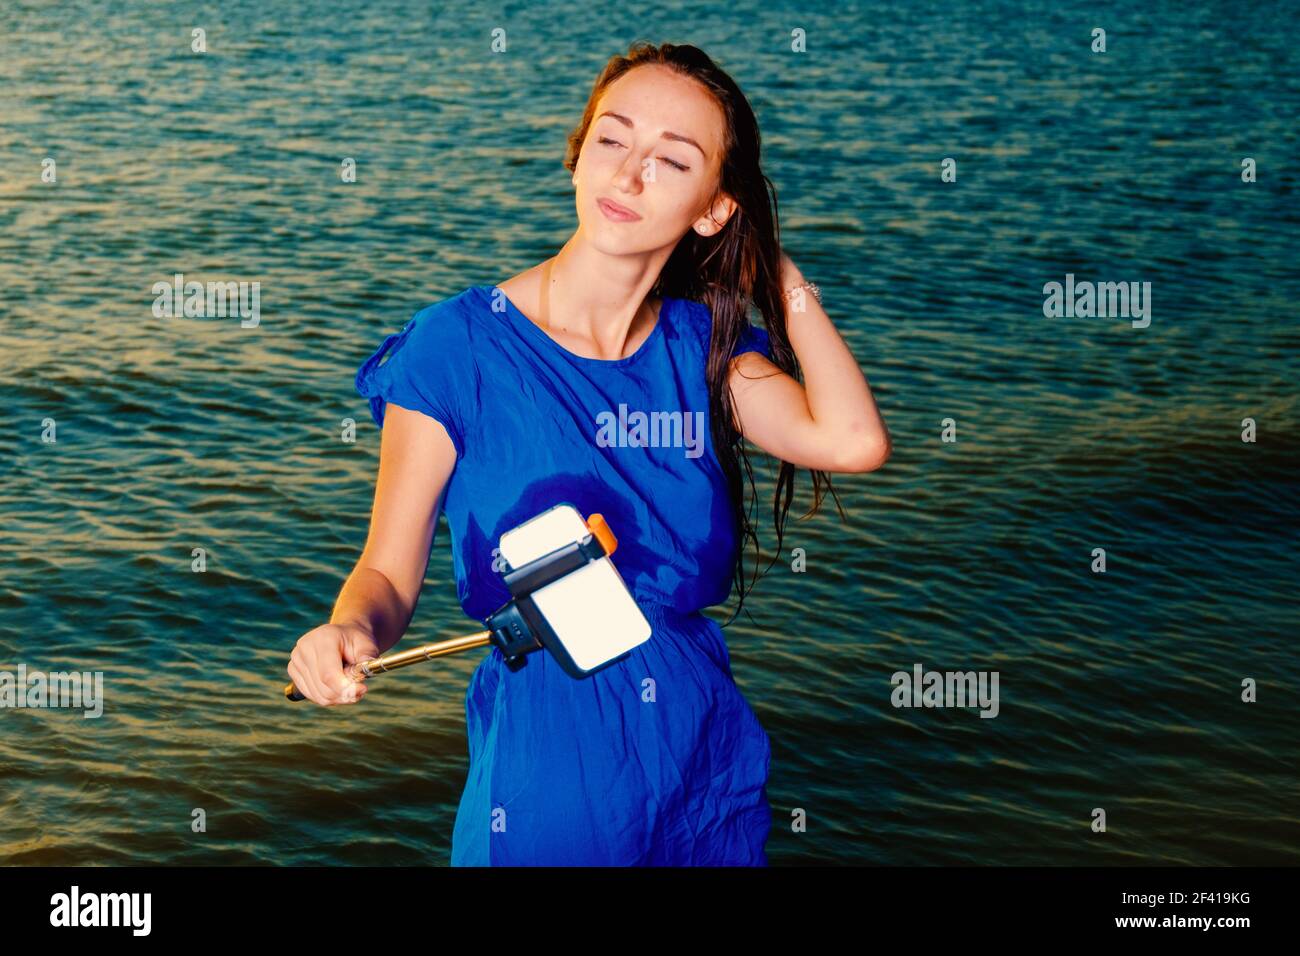 Geschlossenen Augen Frau machen selfie mit selfie Stick vor grünen Meer Wasser Stockfoto